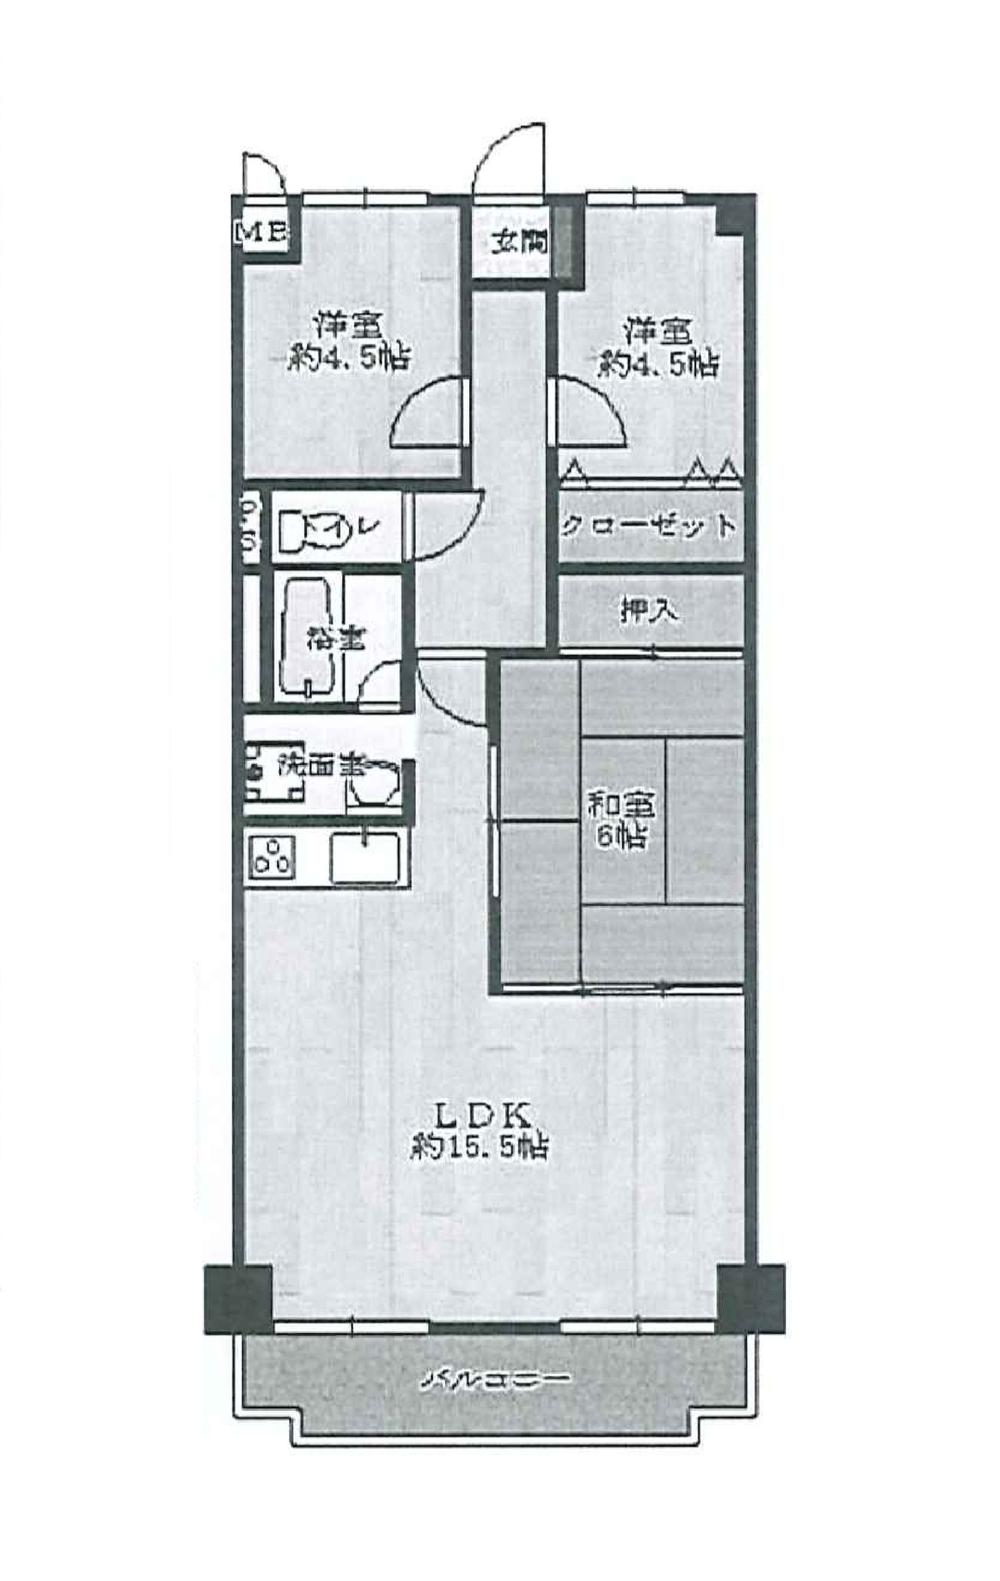 Floor plan. 3LDK, Price 13.8 million yen, Footprint 67.2 sq m , Balcony area 9.48 sq m